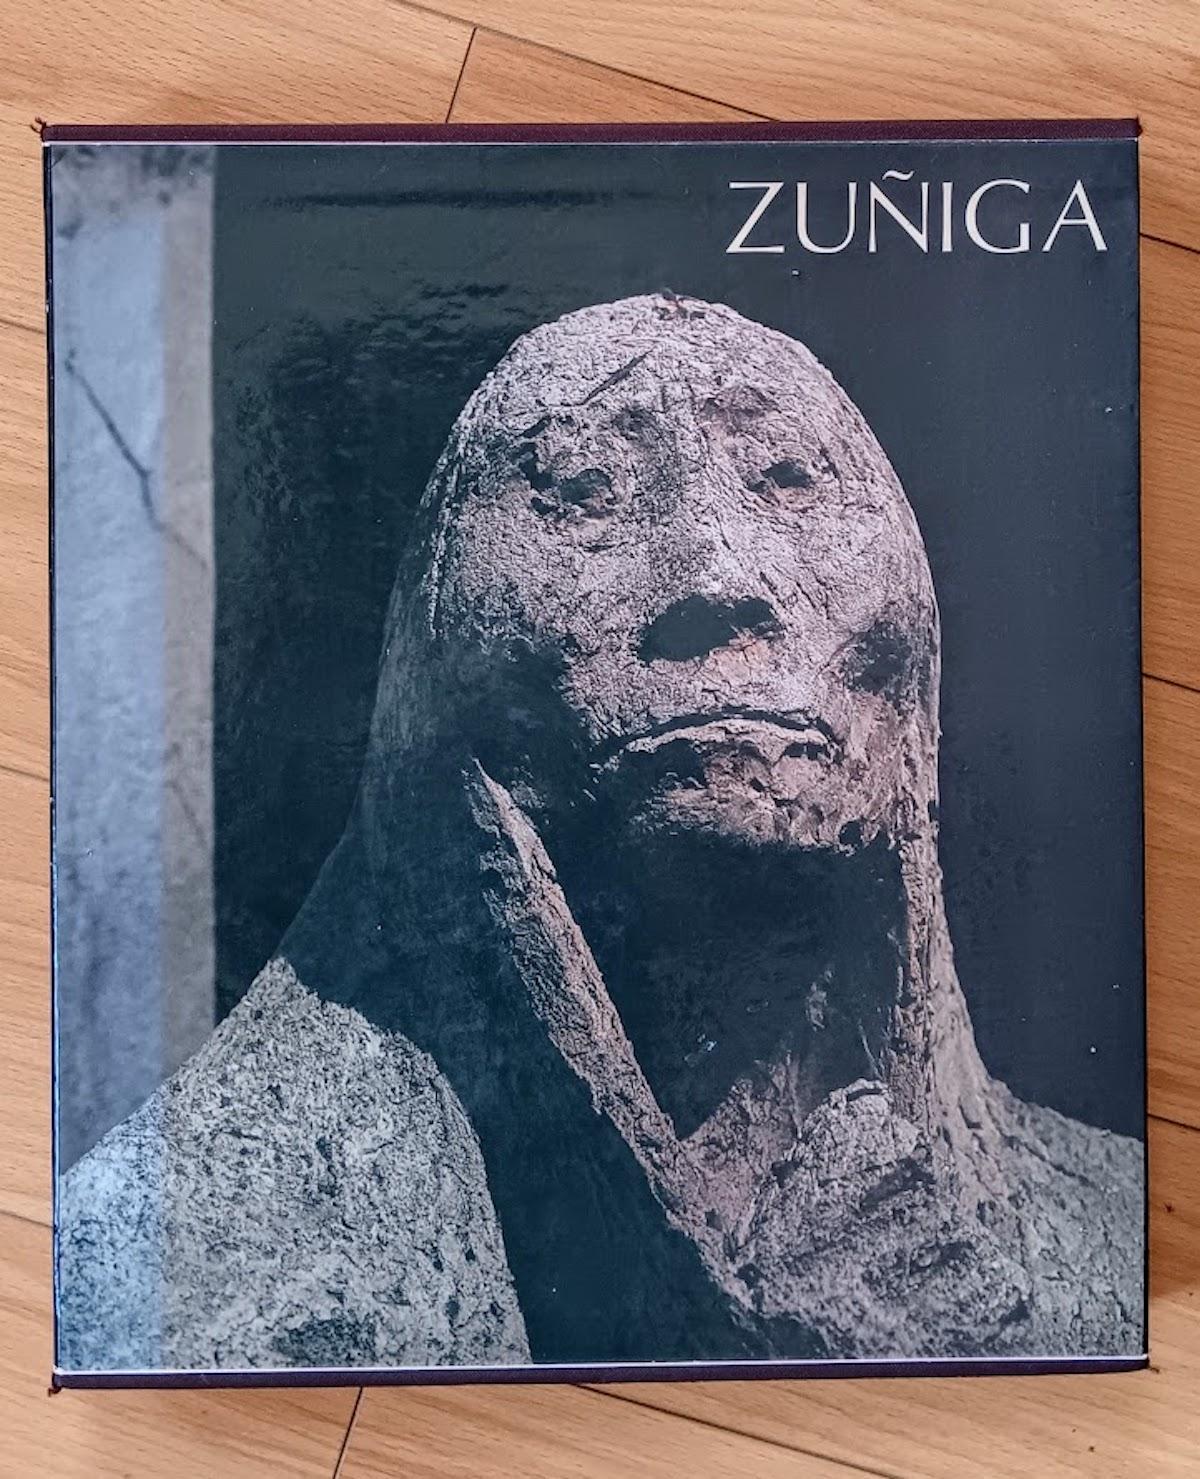 Francisco Zuñiga Artist Monograph - 1st Misrachi Art Gallery Edition